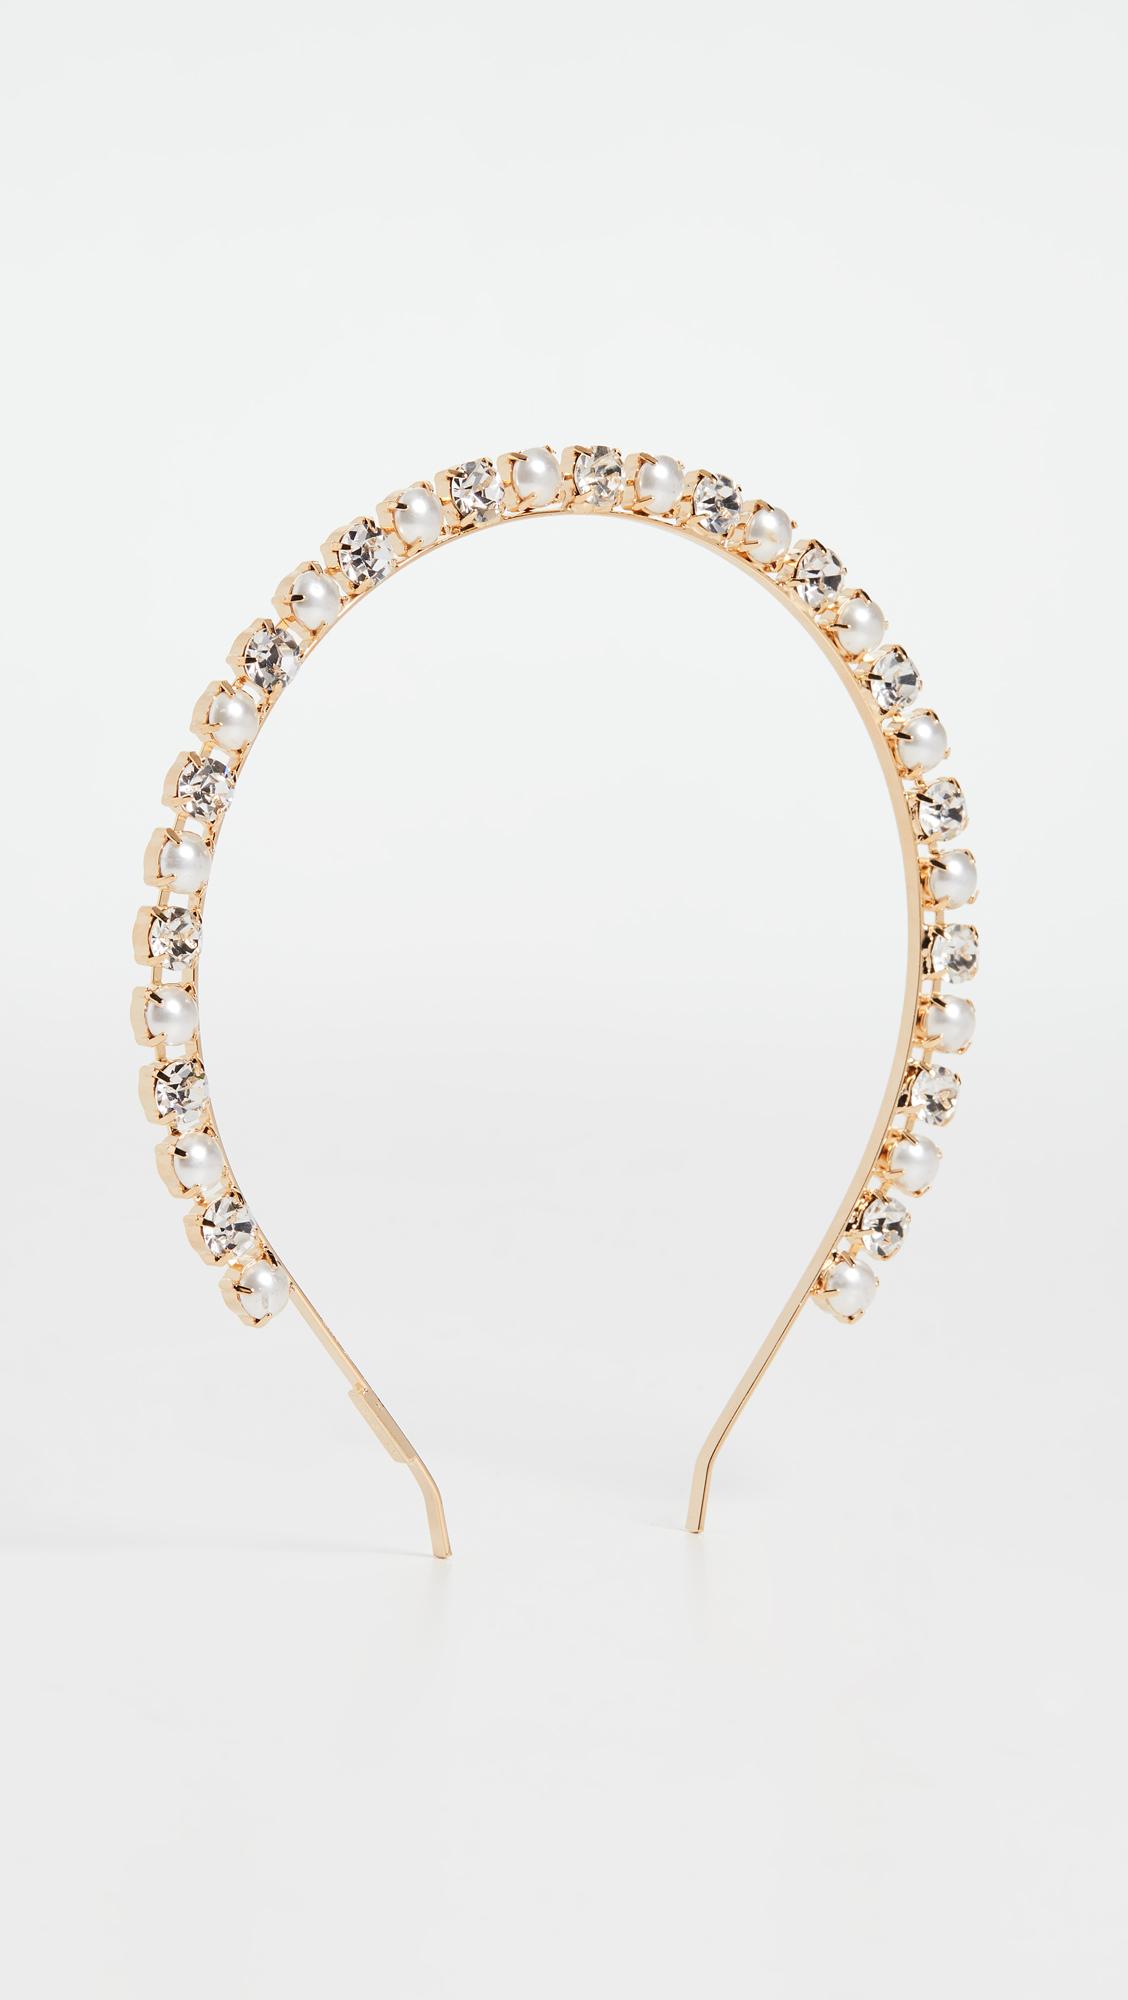 Lelet Glass Pearl & Crystal Headband in Gold/Pearl (Metallic) - Lyst